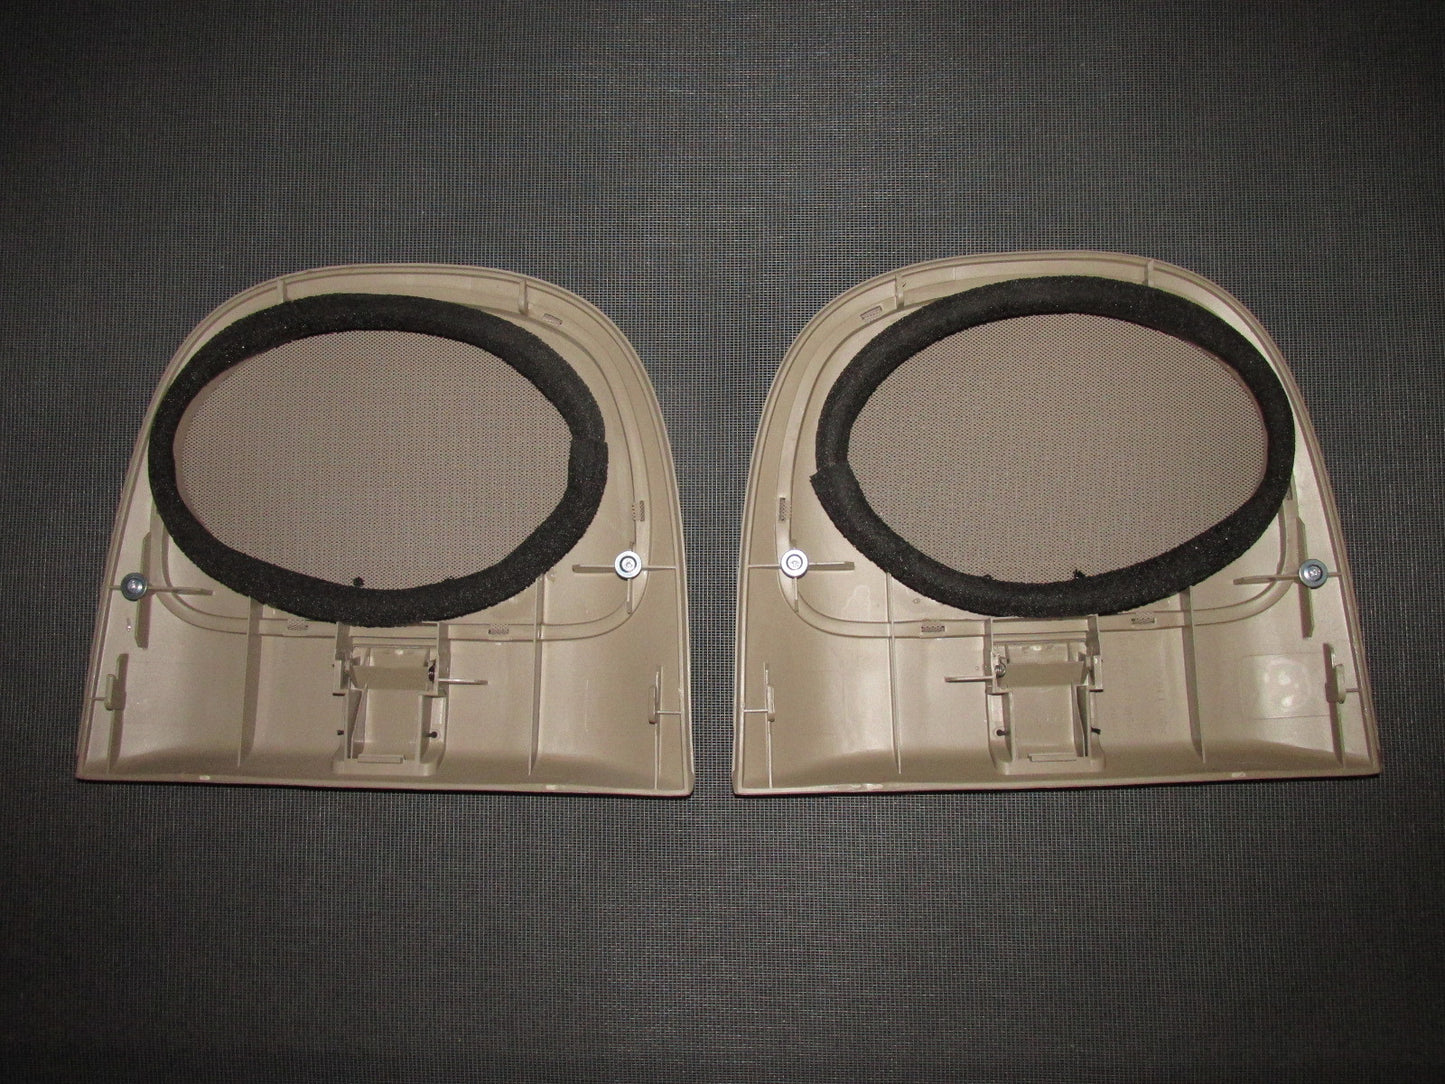 01 02 03 Acura CL OEM Rear Deck Speaker Grille